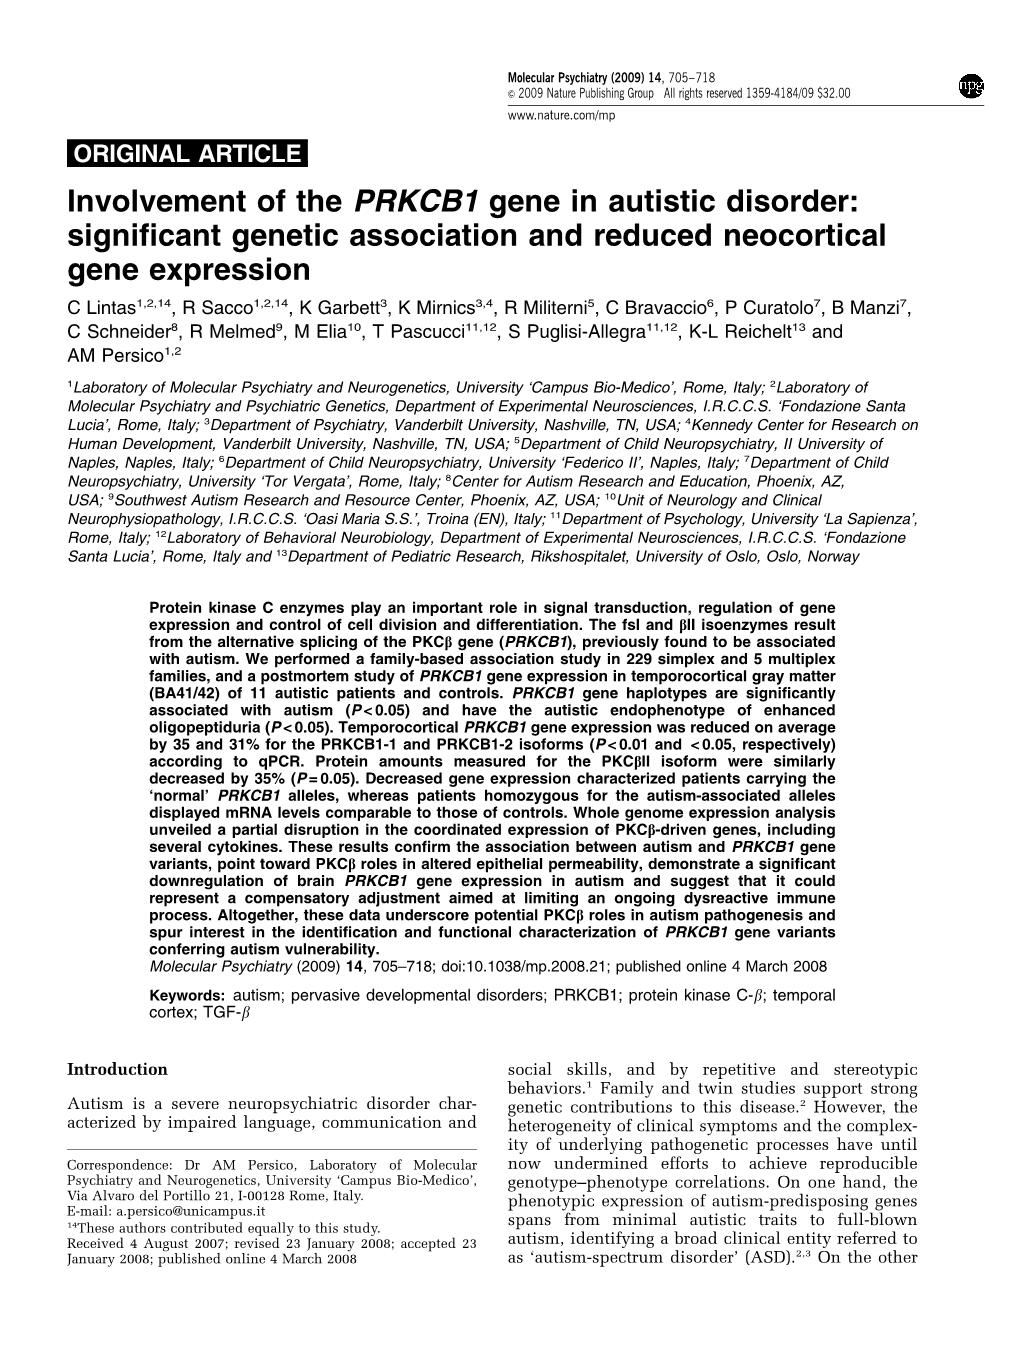 Involvement of the PRKCB1 Gene in Autistic Disorder